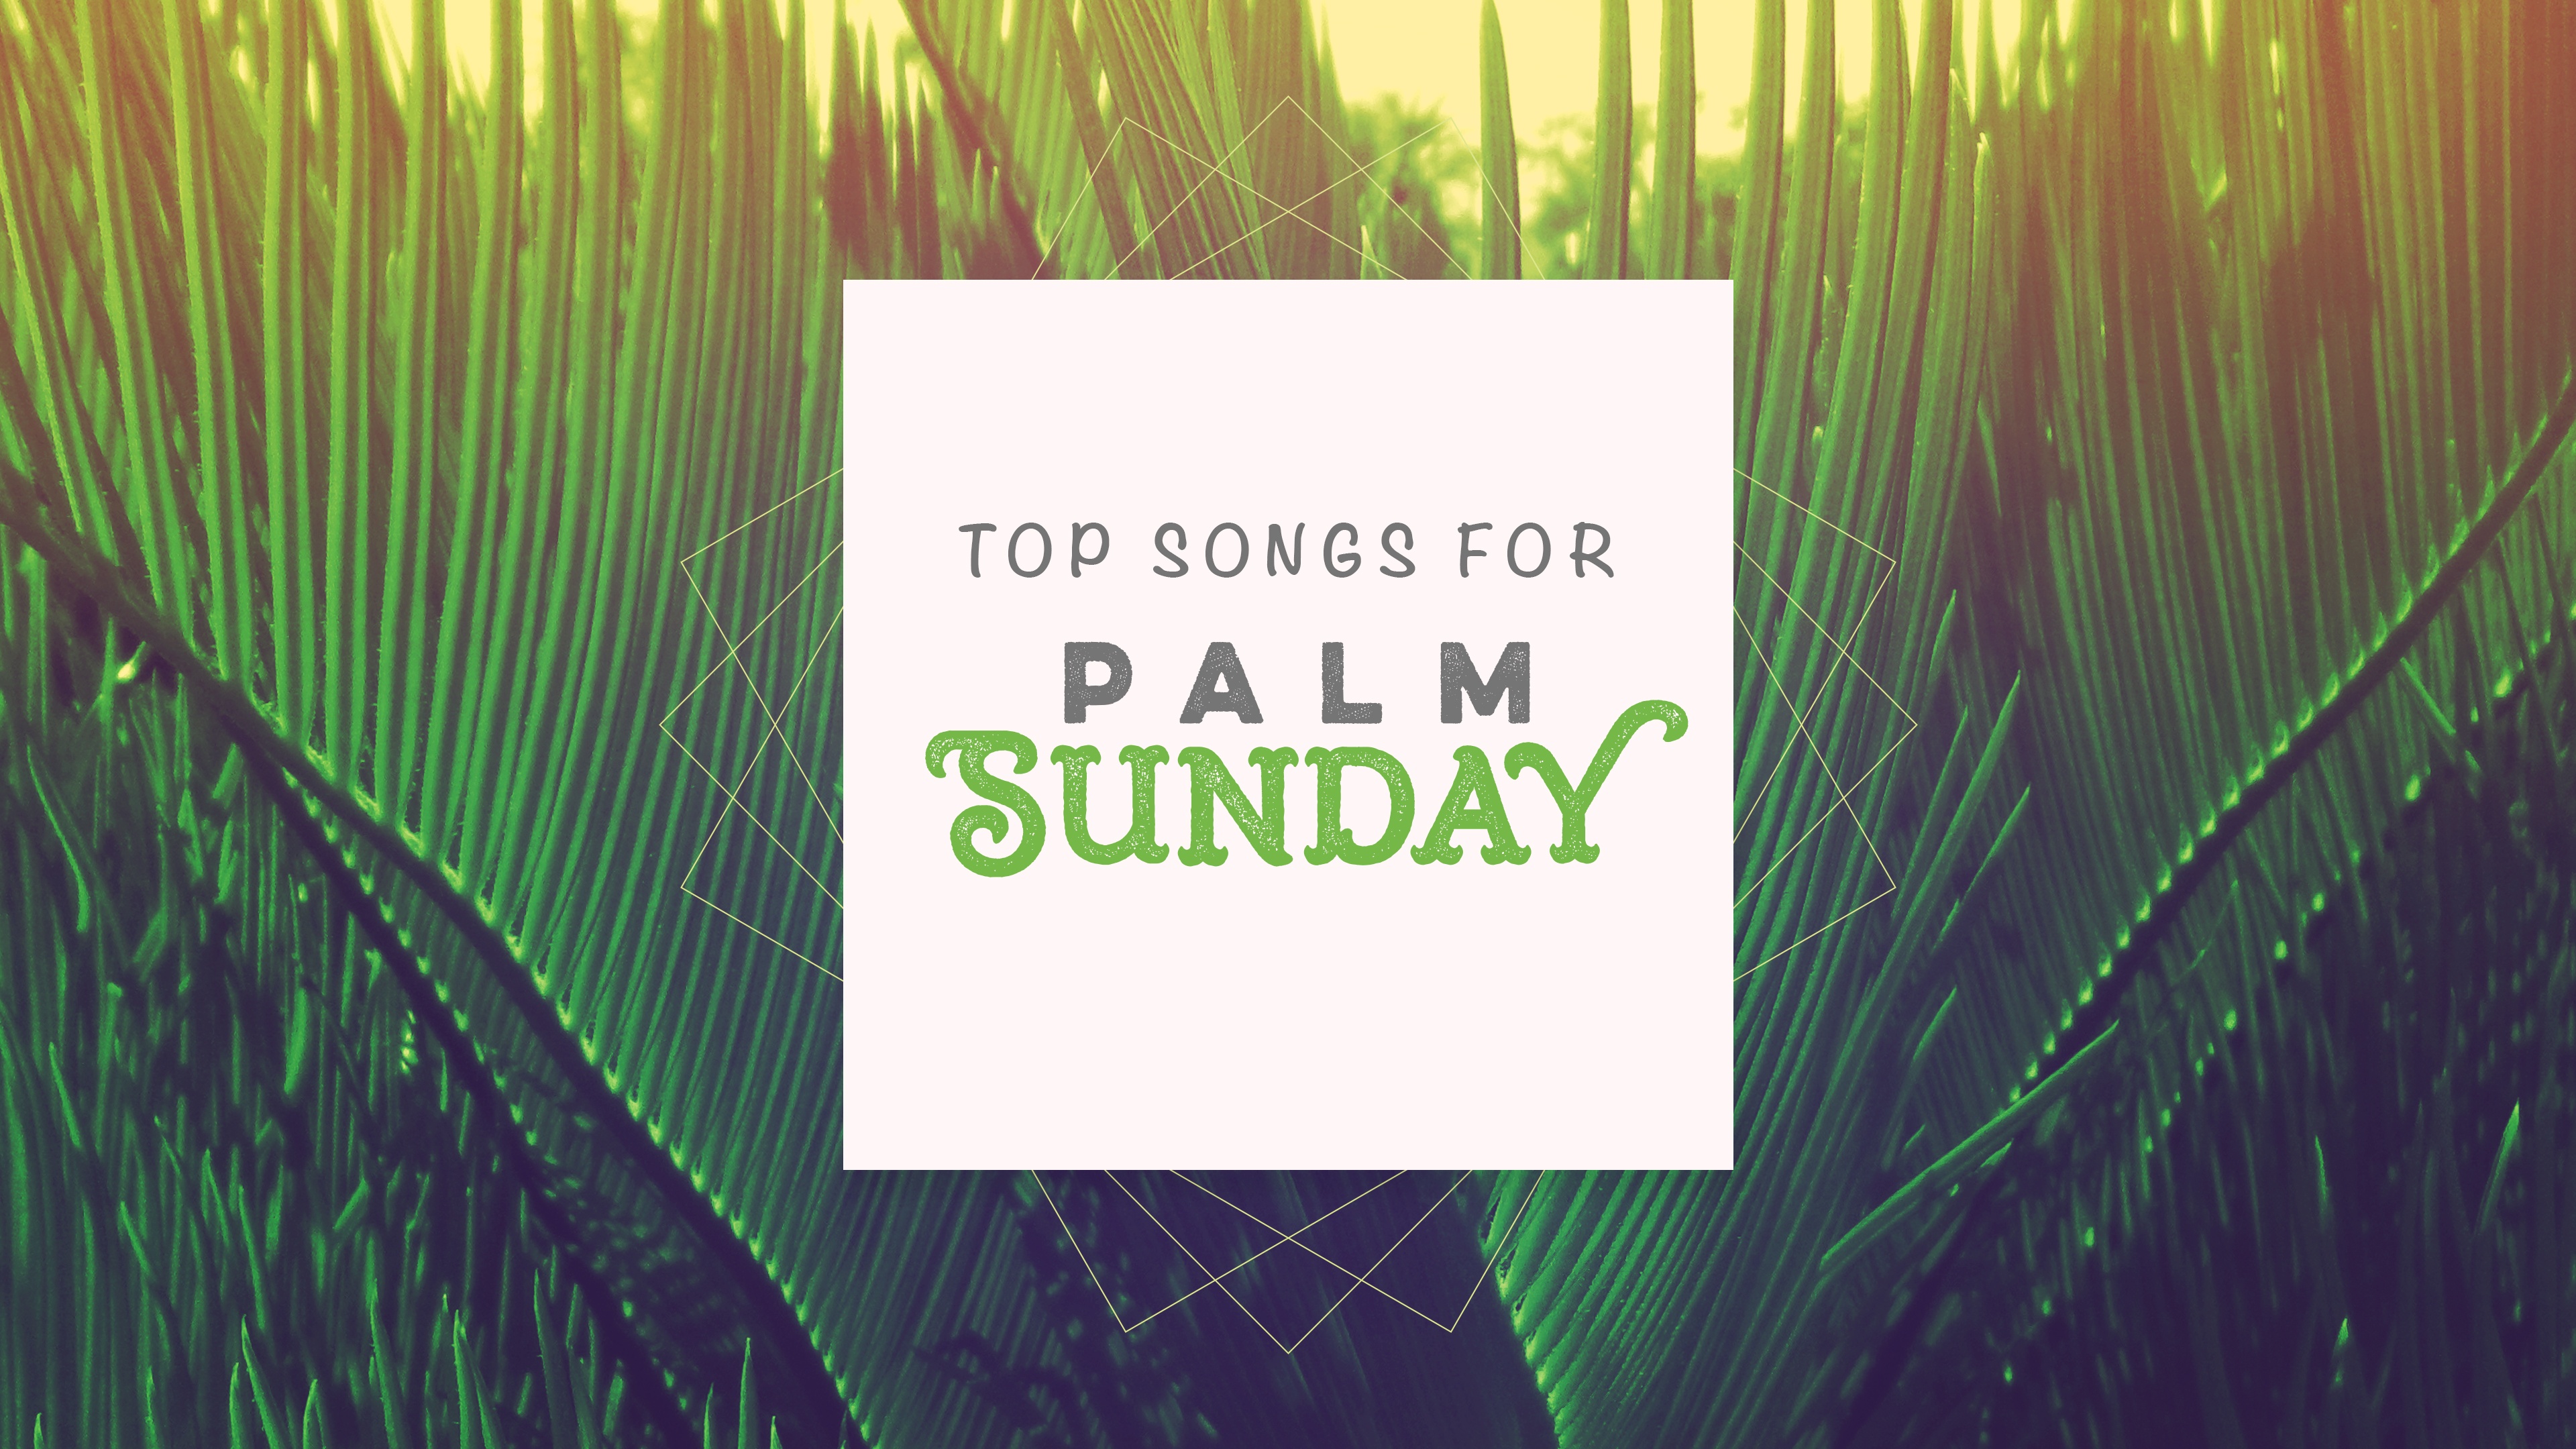 Top Songs For Palm Sunday Services Sharefaith Magazine